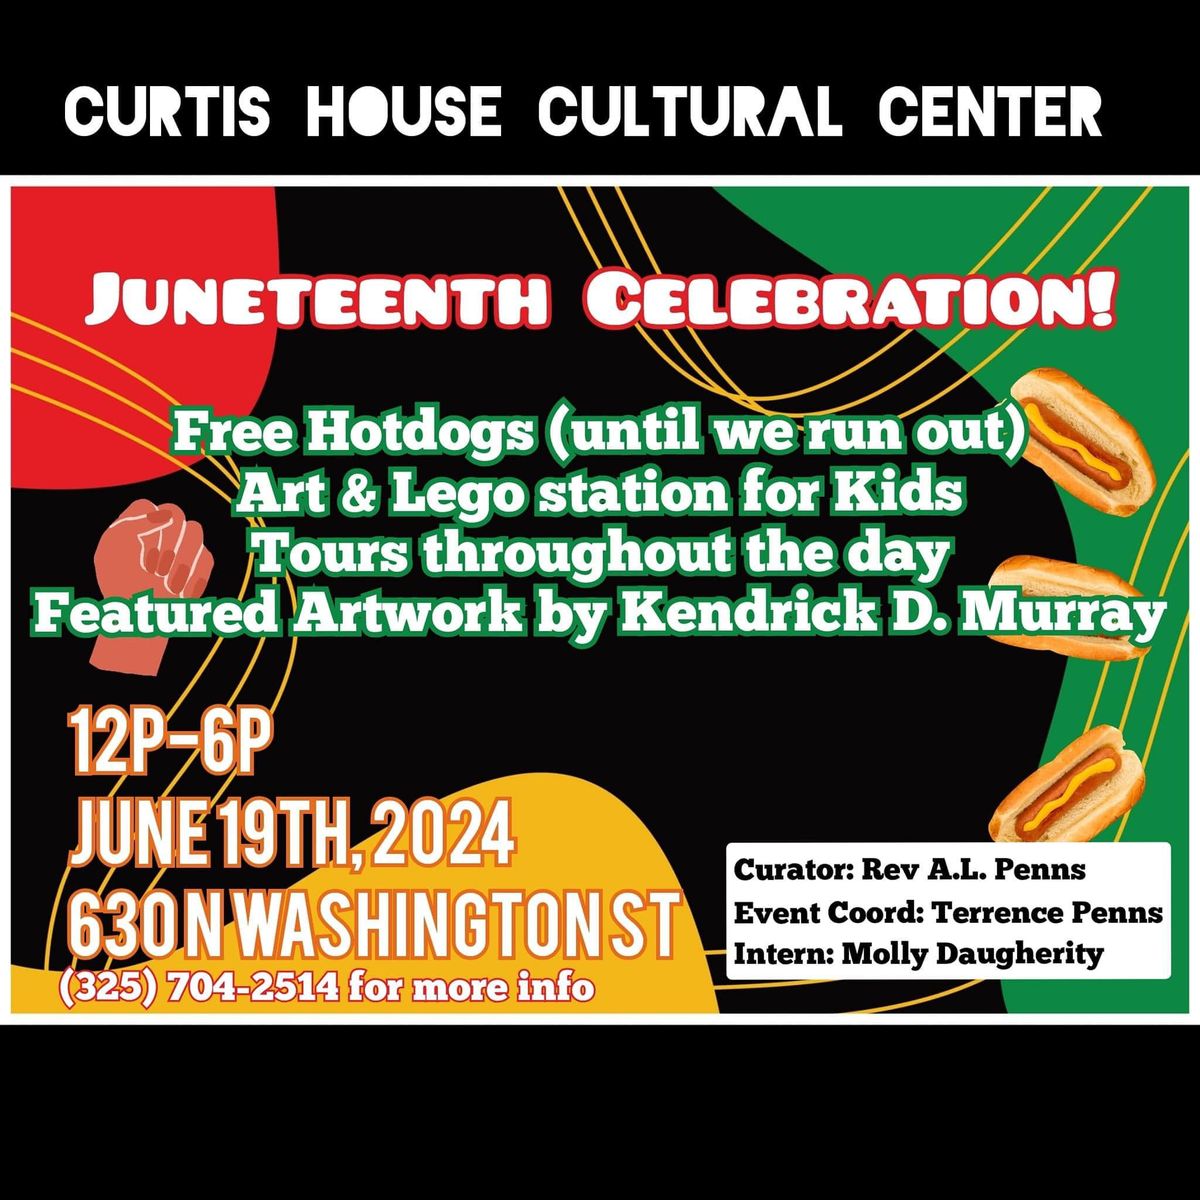 Juneteenth Celebration at Curtis House Cultural Center